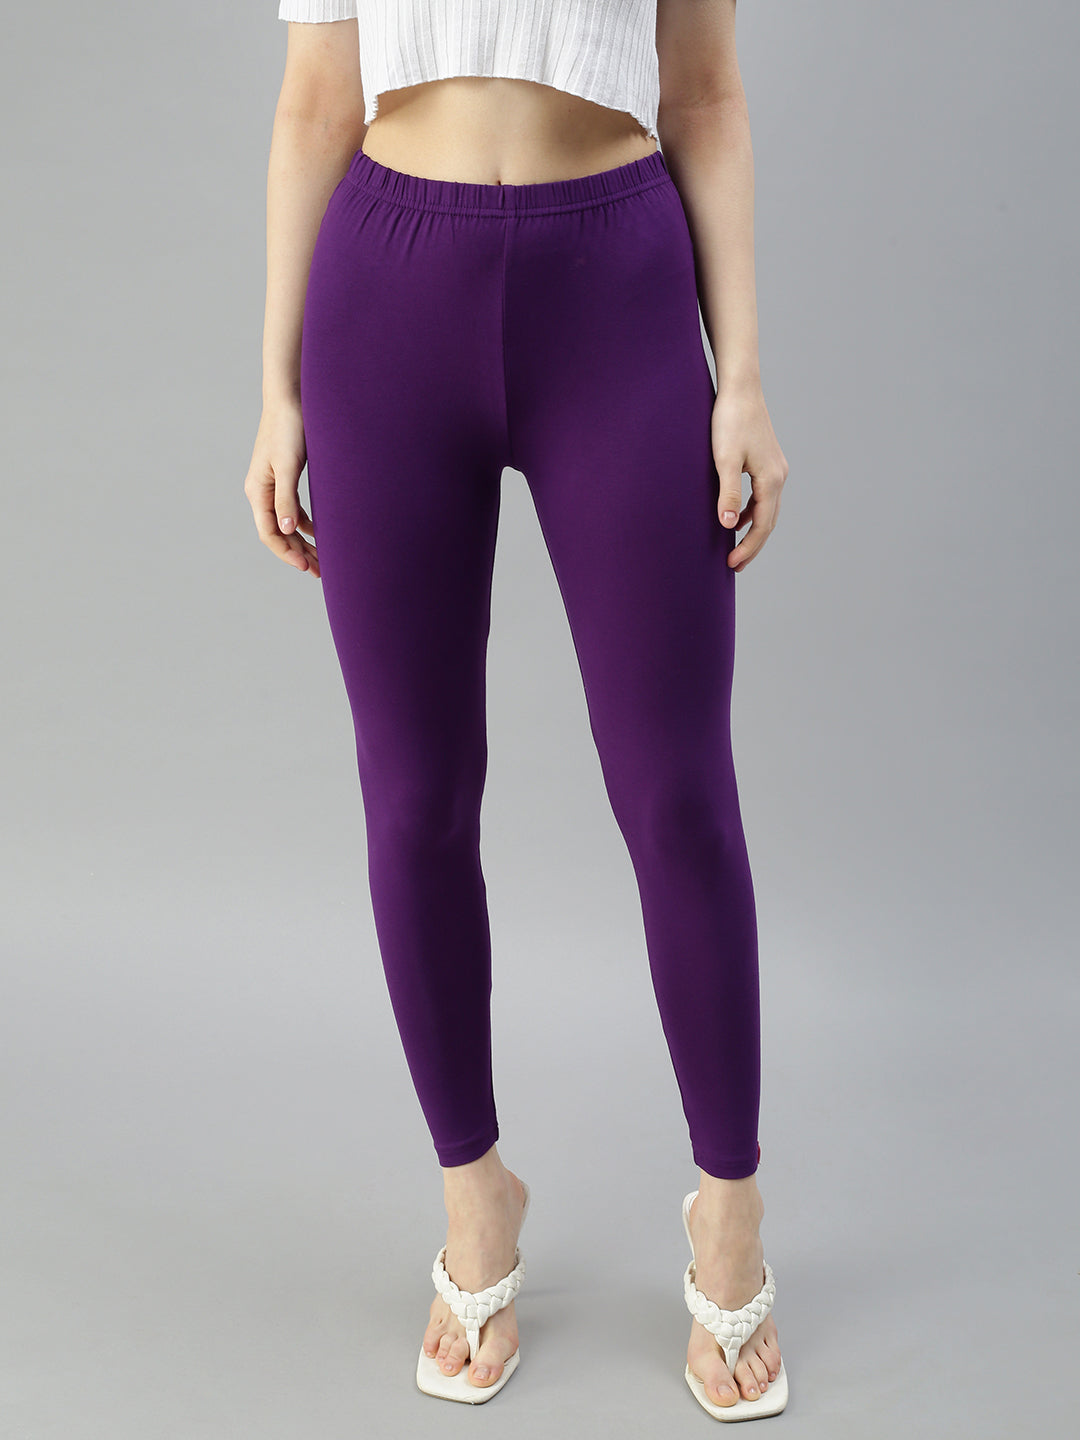 Stylish and Comfortable Dark Purple Leggings